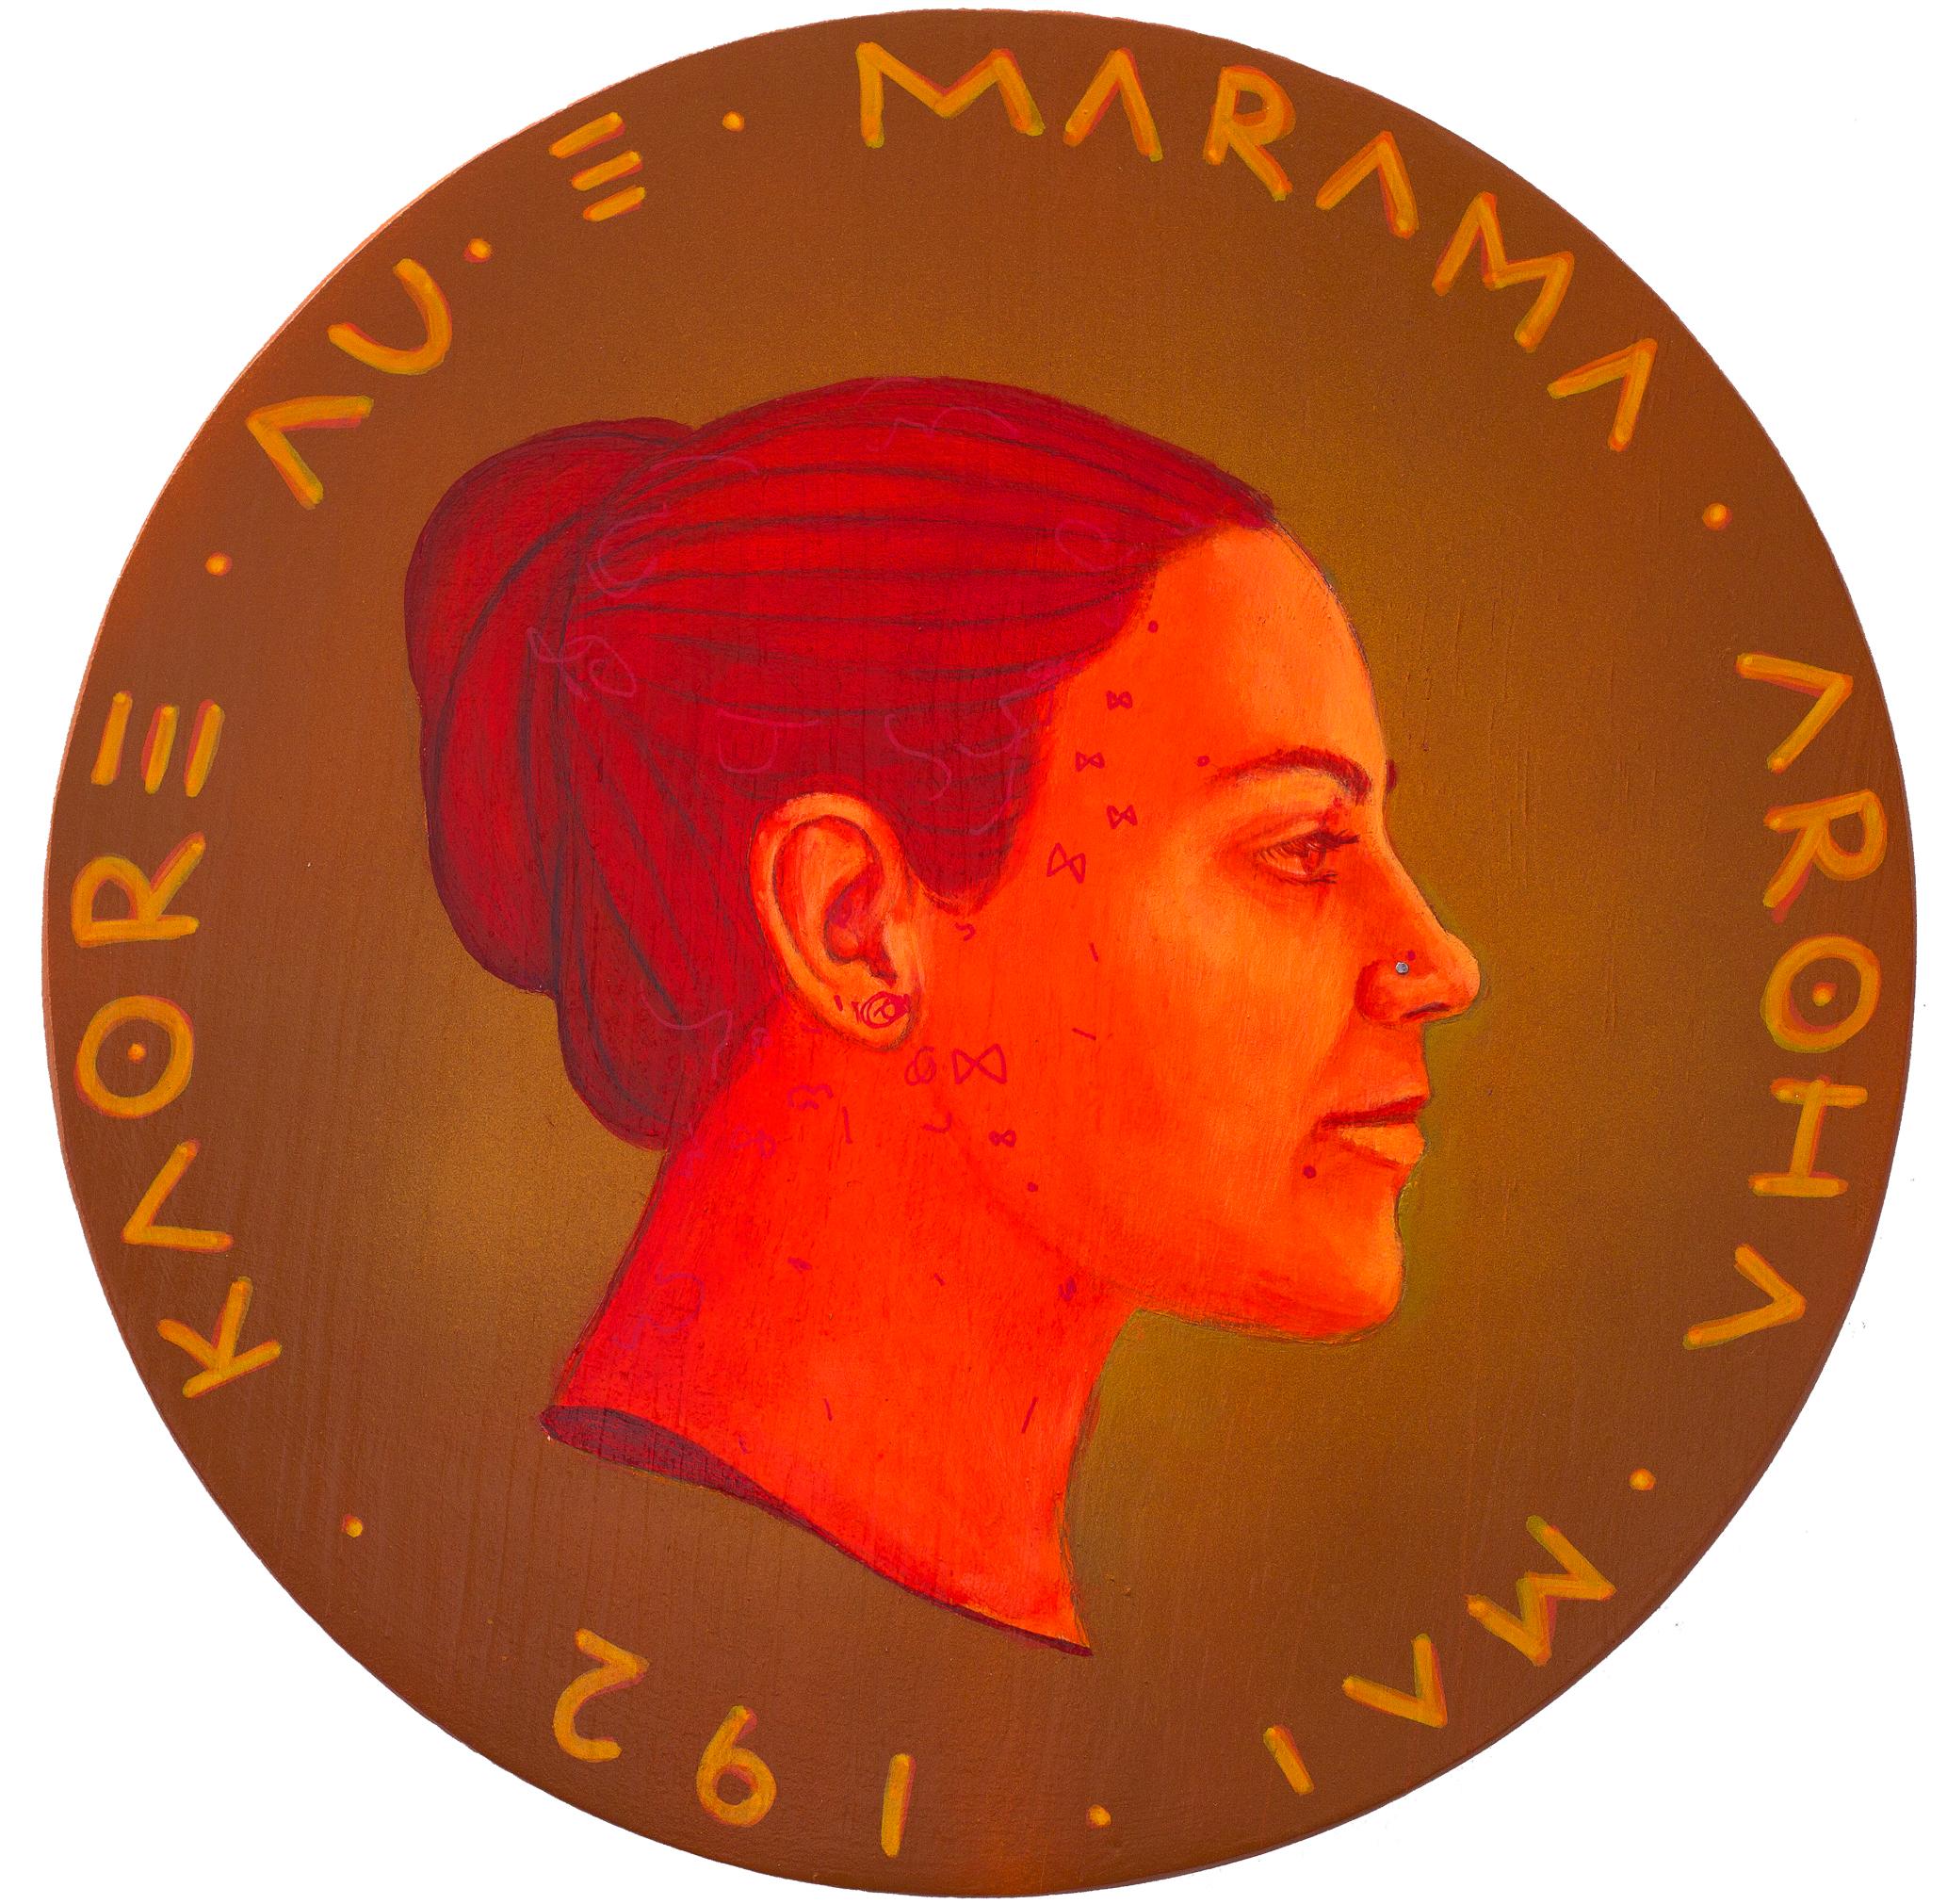 Contemporary Figurative Pop Portrait on Wooden Wood Coin. Maori. "Currency #218" - Mixed Media Art by Natasha Lelenco